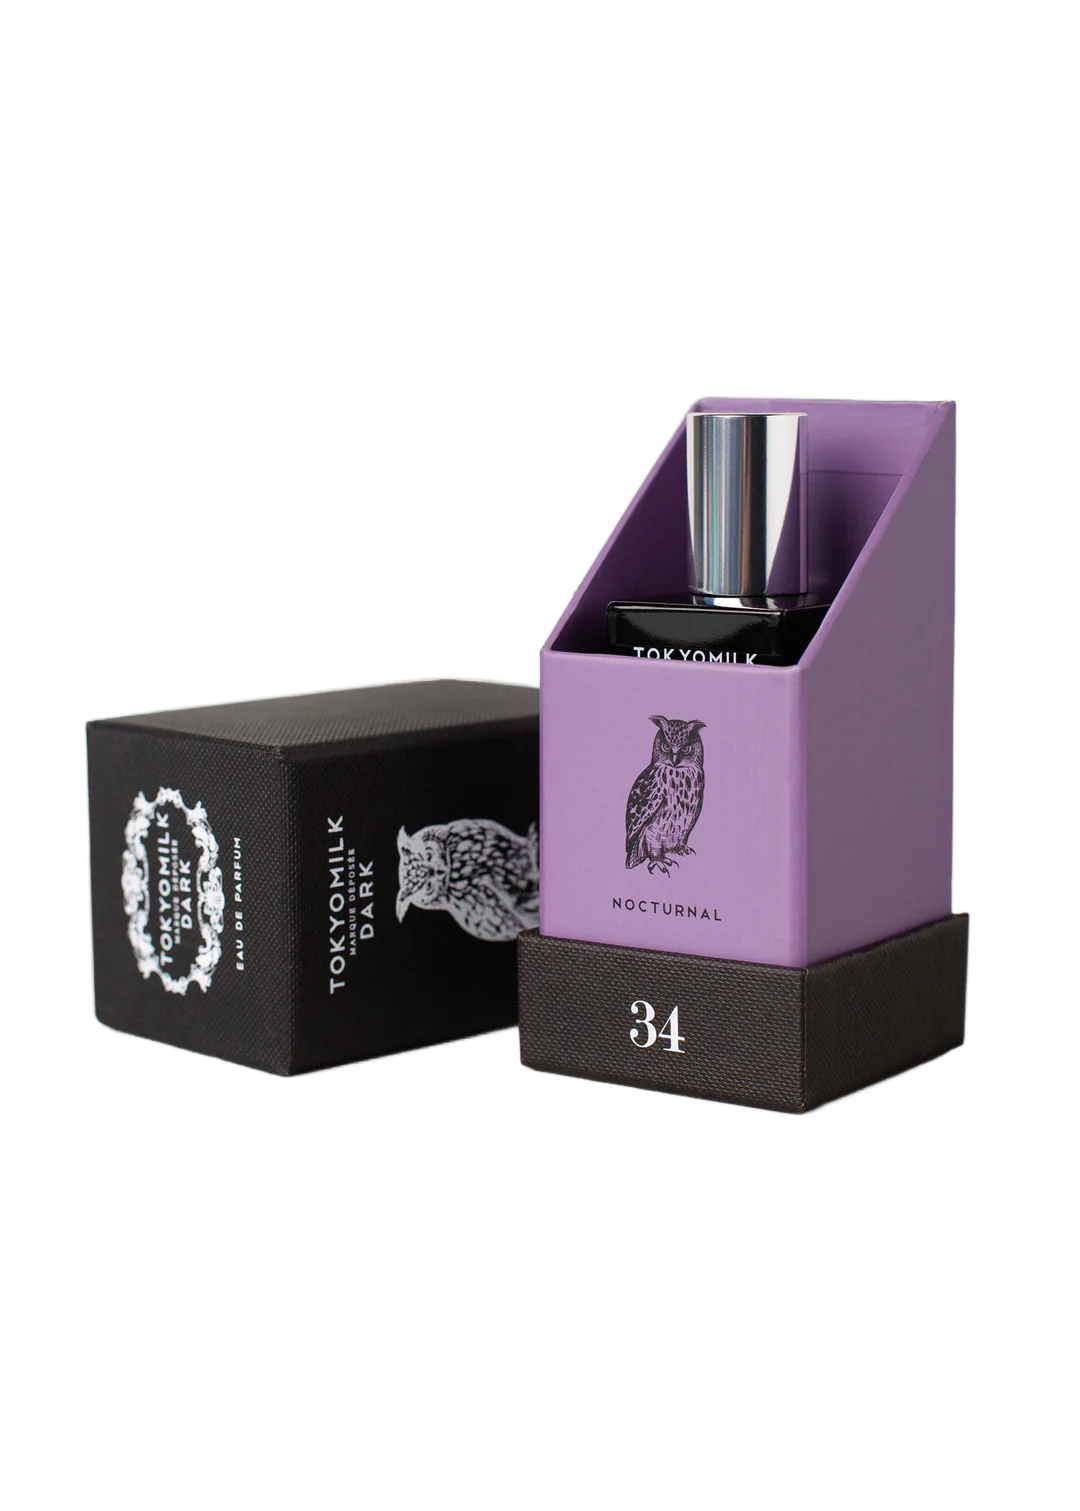 A purple perfume box labeled "Margot Elena TokyoMilk Dark Nocturnal No. 34 Eau de Parfum" from "TokyoMilk 34" with a metallic cap peeking out, placed